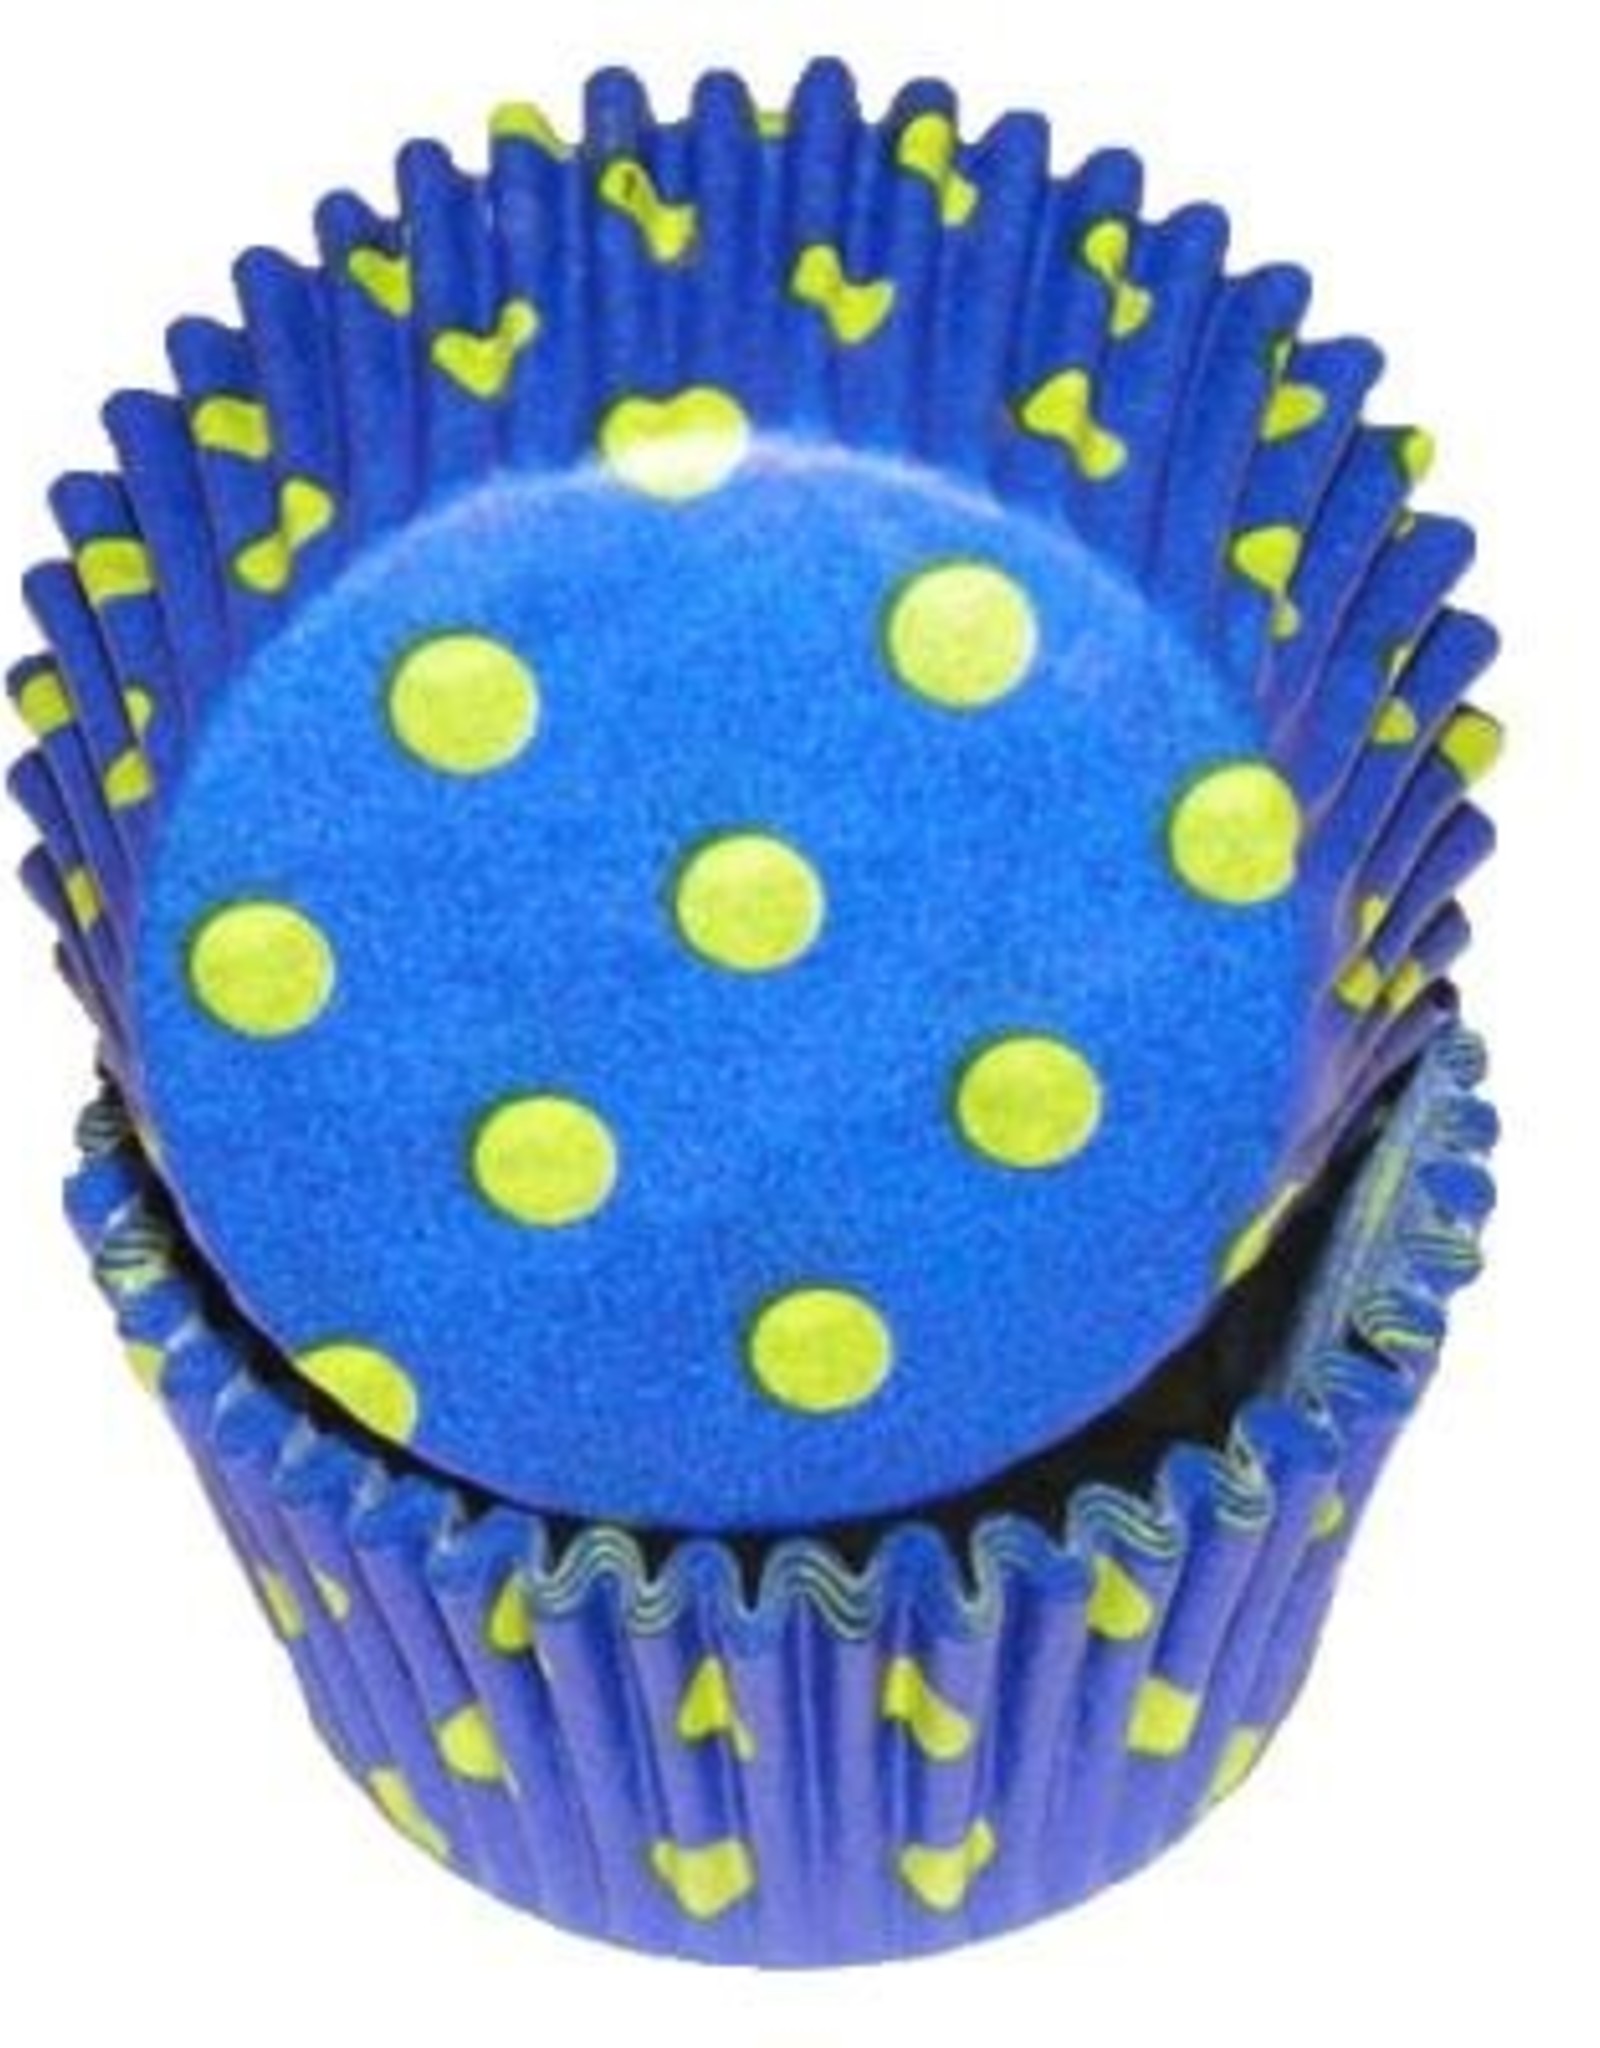 Blue (Royal) w/Yellow Dot Baking Cups(30-35ct)